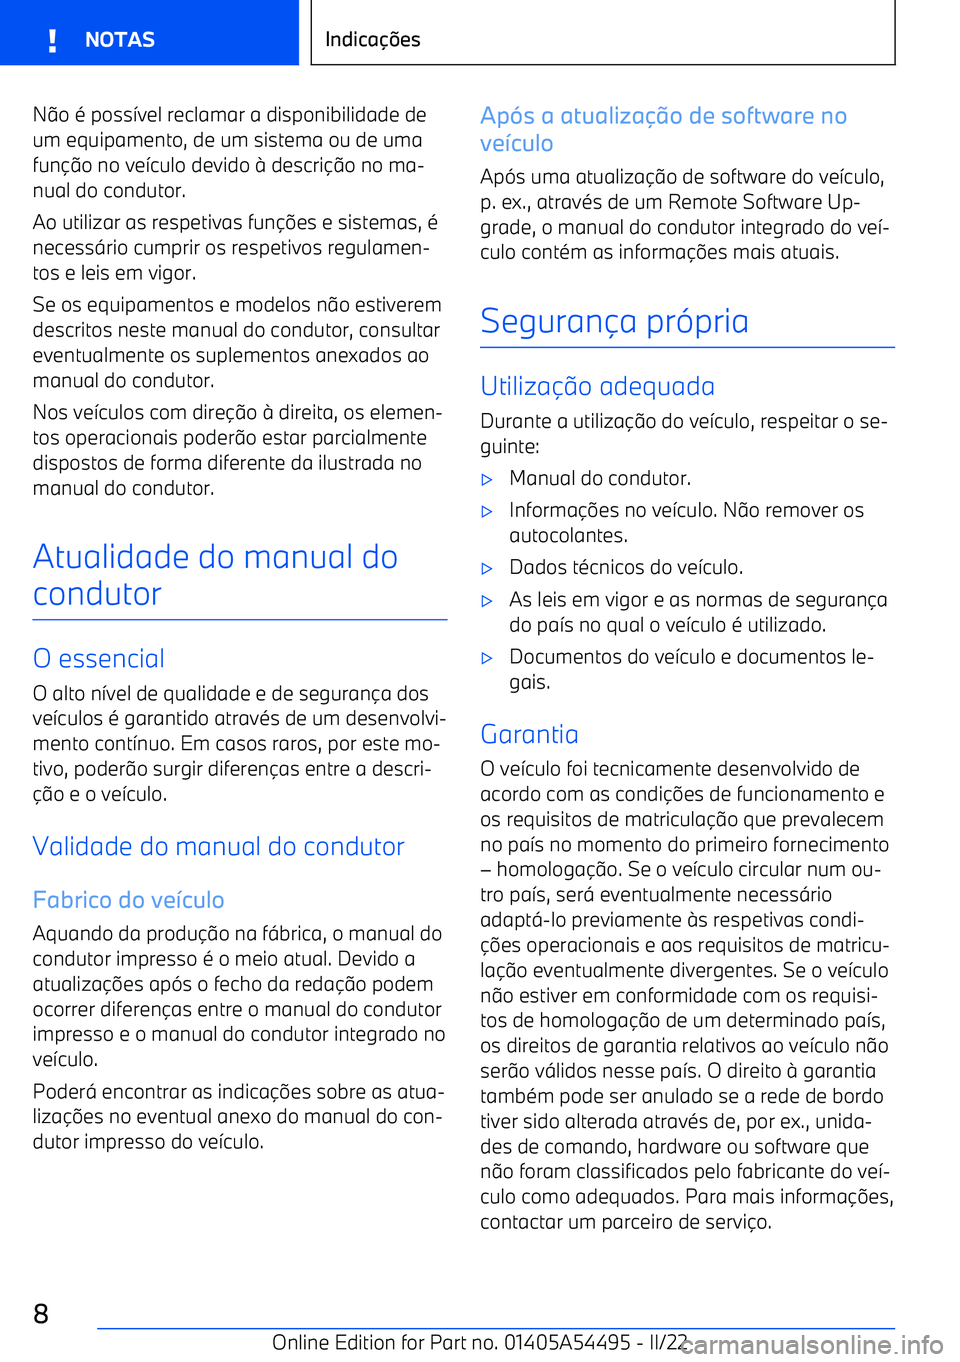 BMW IX 2022  Manual do condutor (in Portuguese) N9o 